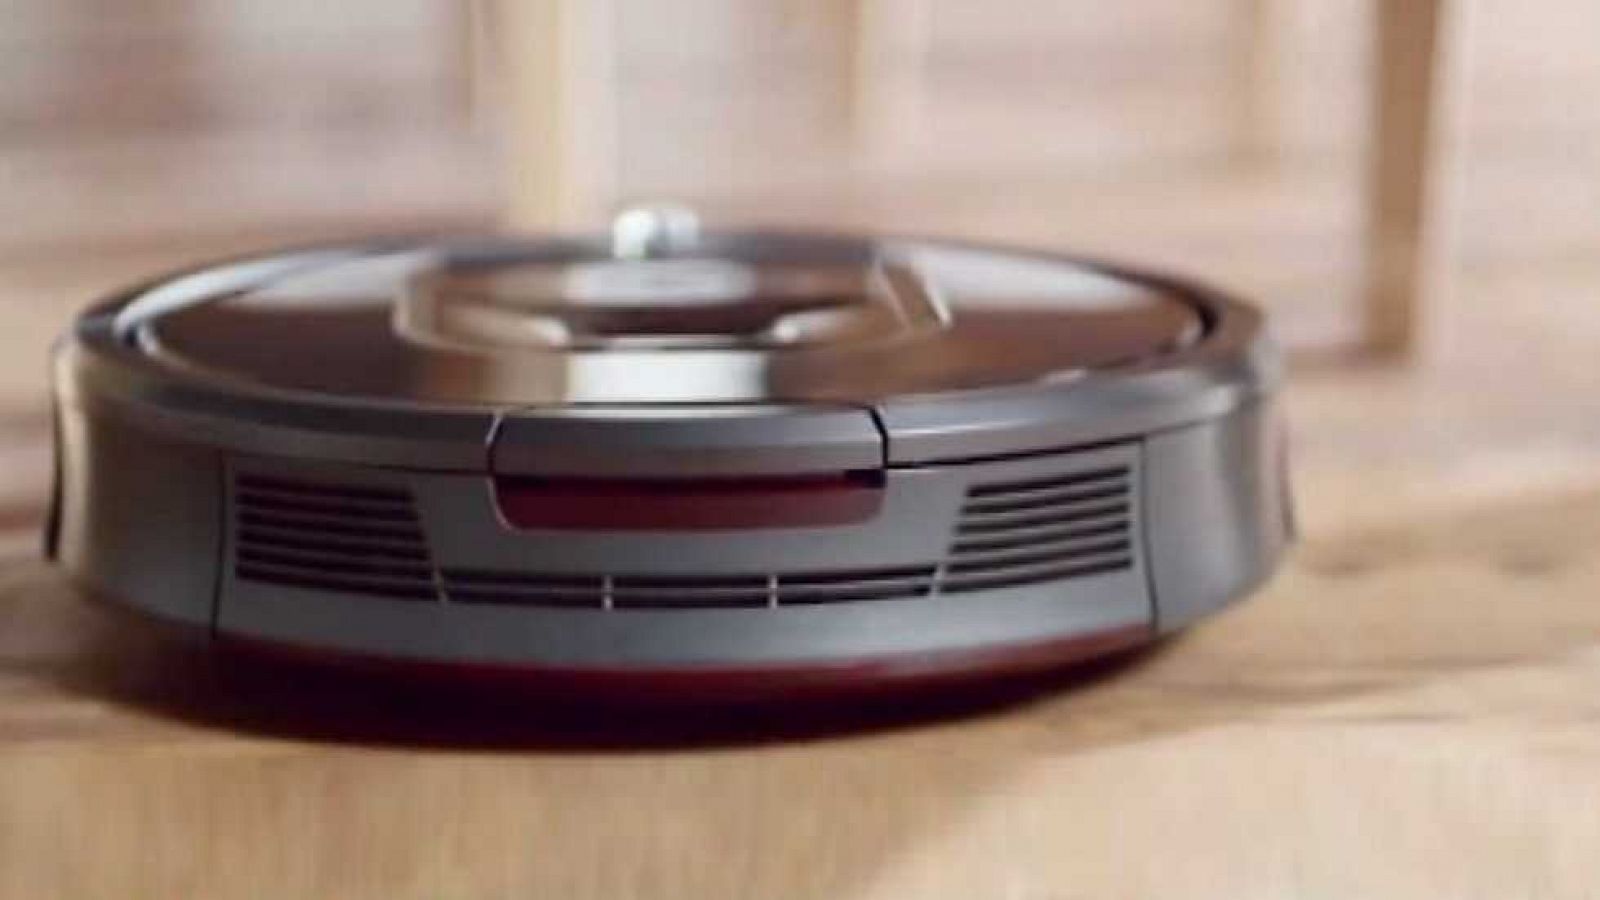 Zoom Net - Roomba de iRobot, Premios ADSLZone y Theo Jansen